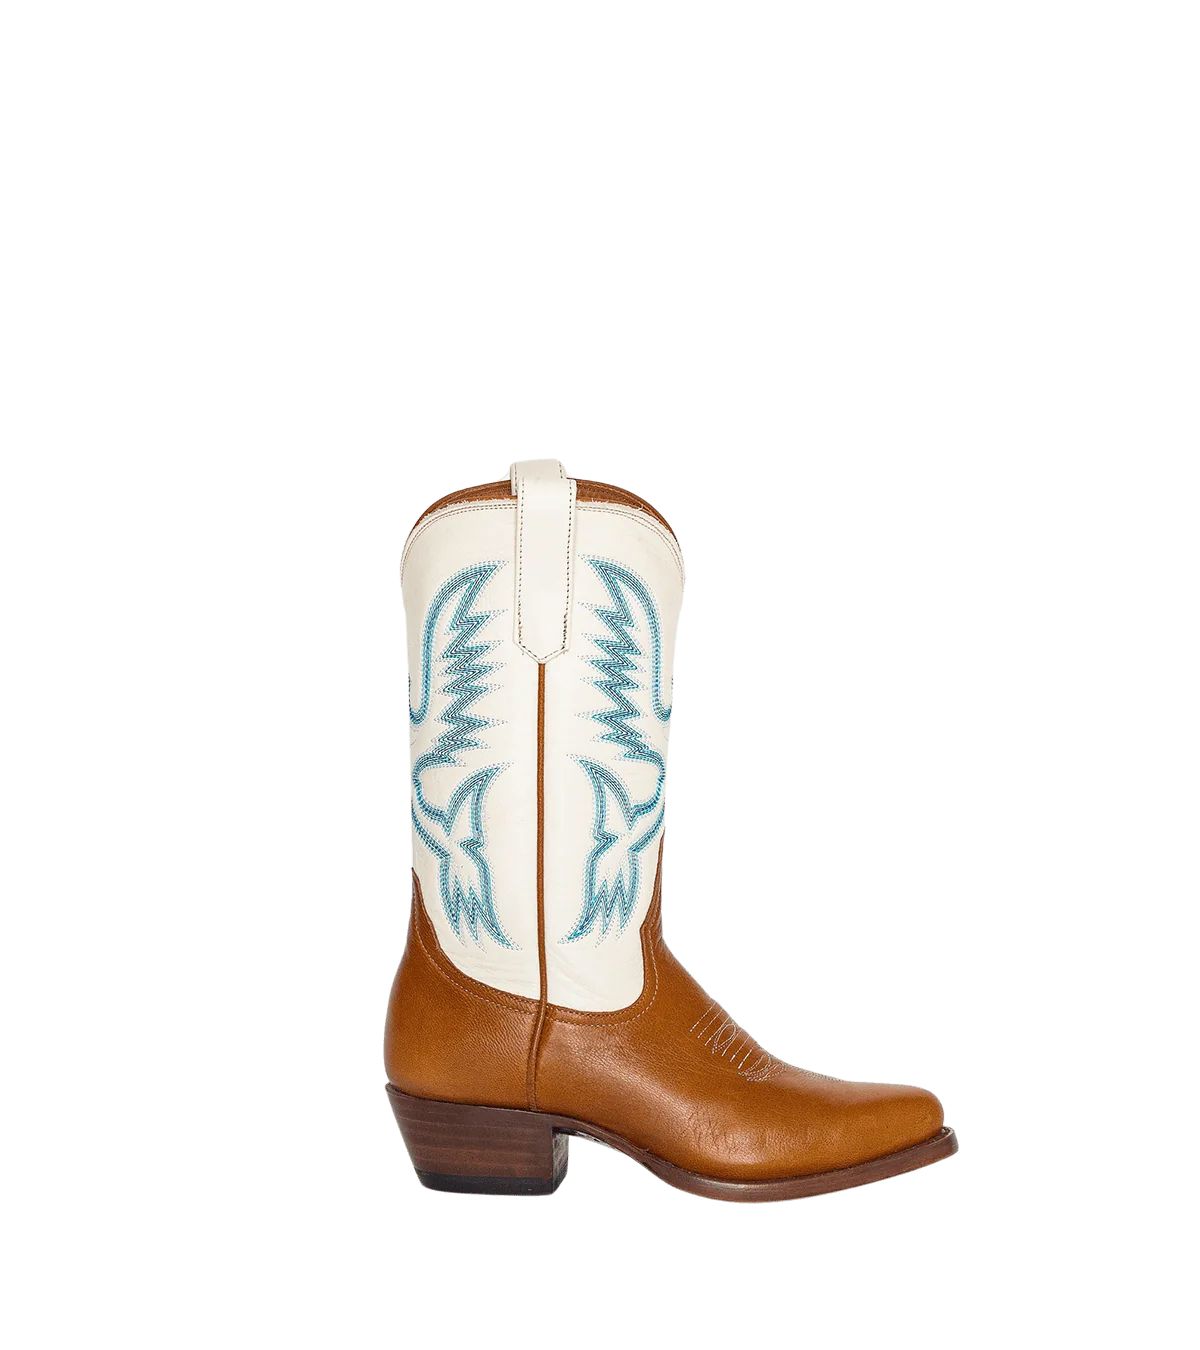 Samantha Crème | Luxury Fashion Women's Cowboy Boots | Miron Crosby | Miron Crosby